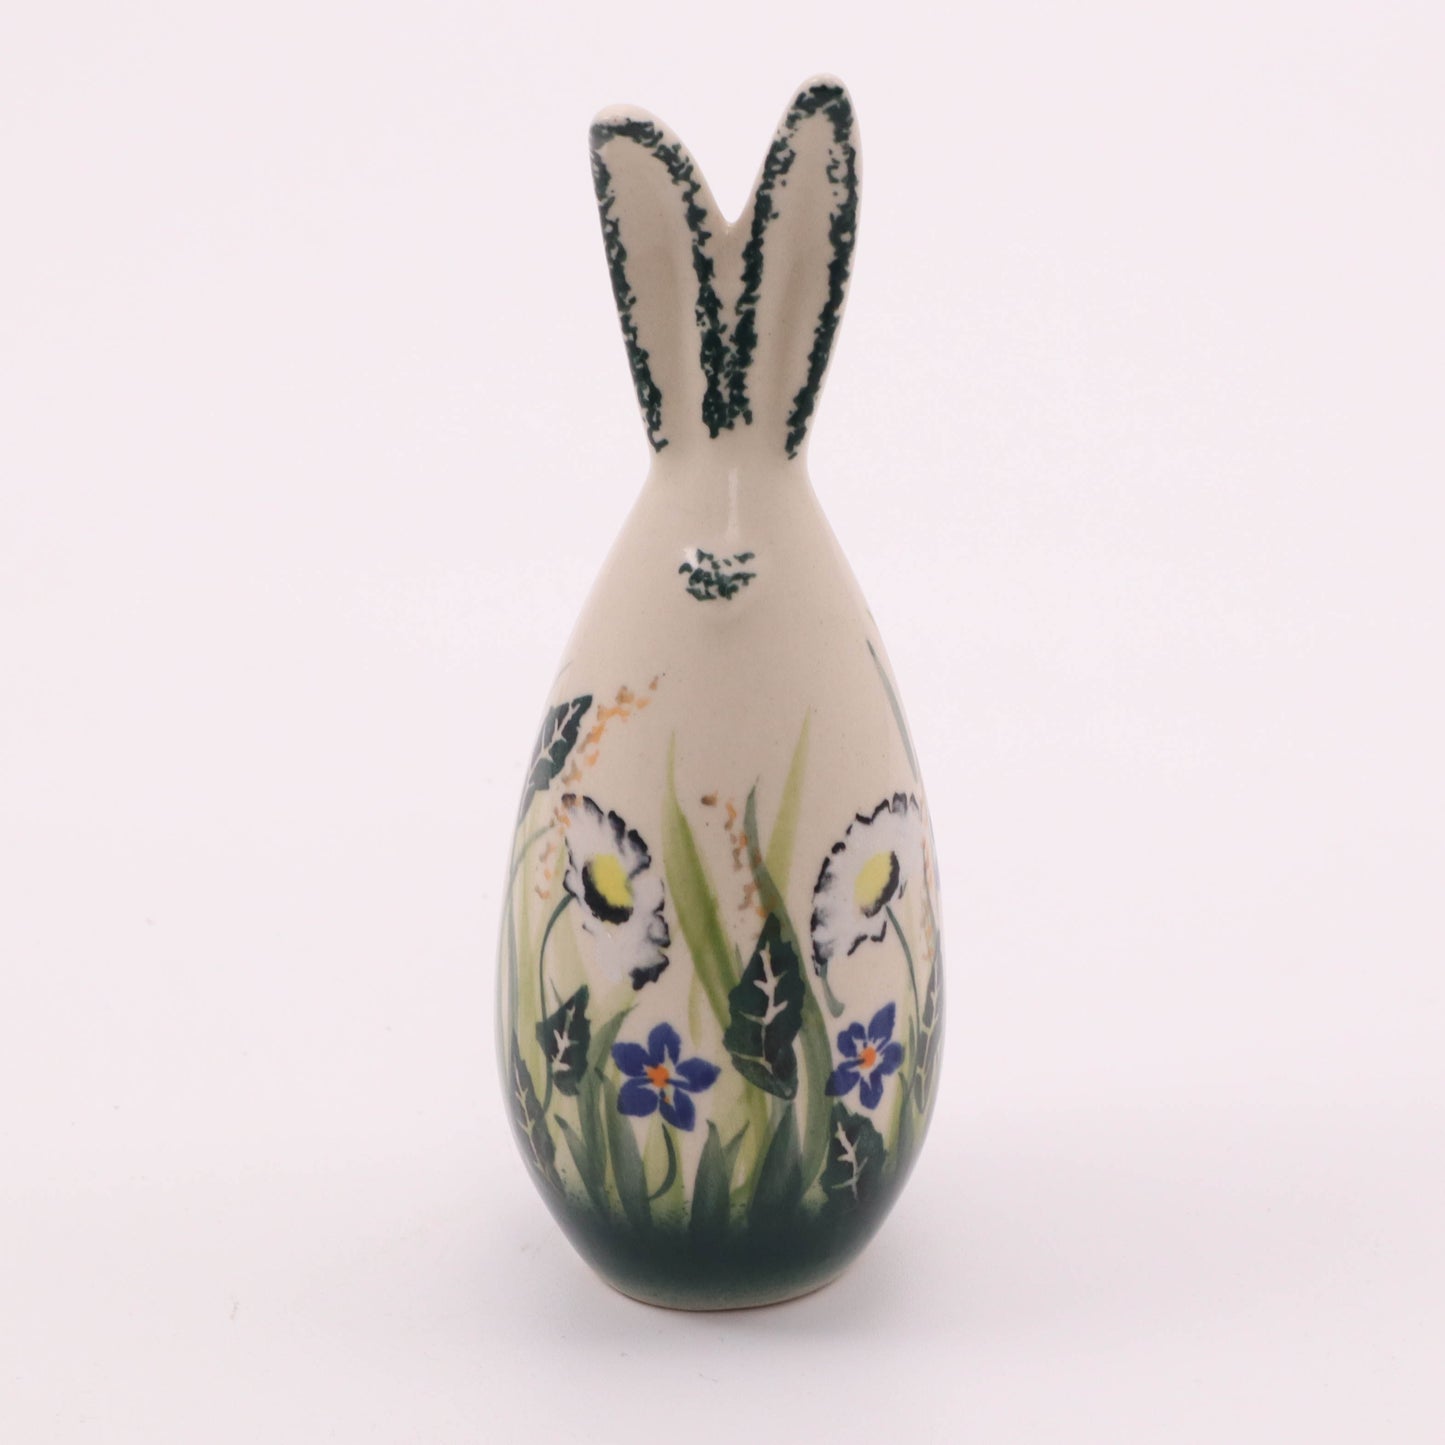 5" Bunny Figurine. Pattern: Grass U